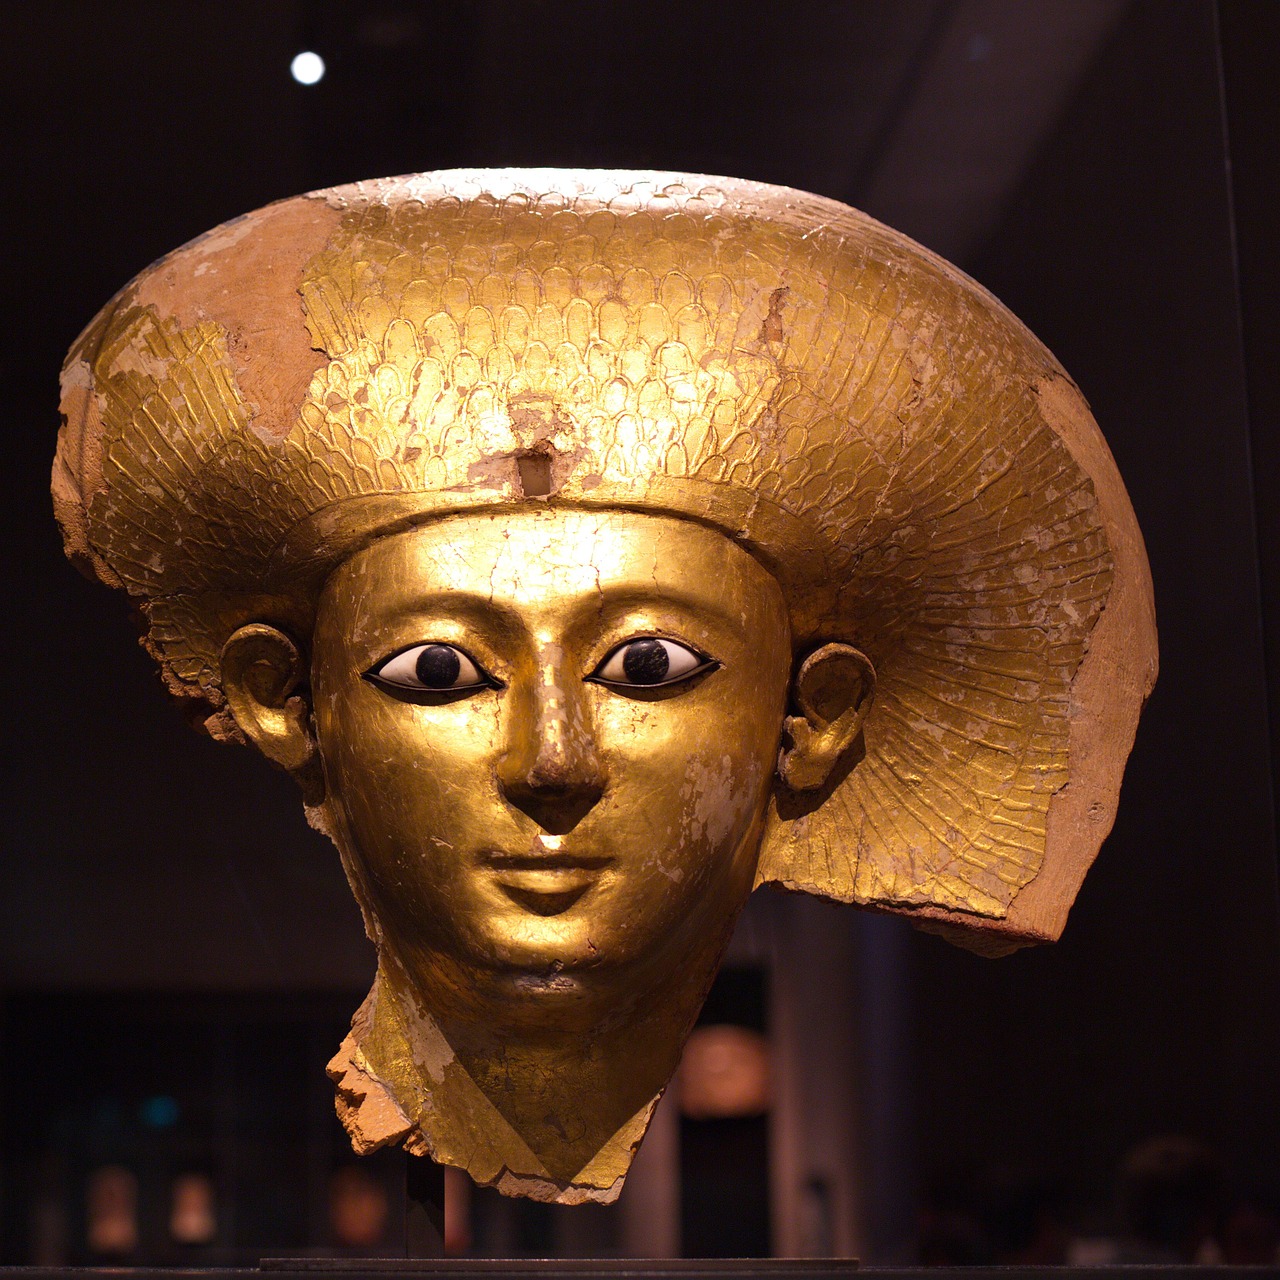 Pharaonic, Aukso Kaukė, Munich, Egipto Muziejus, Nemokamos Nuotraukos,  Nemokama Licenzija